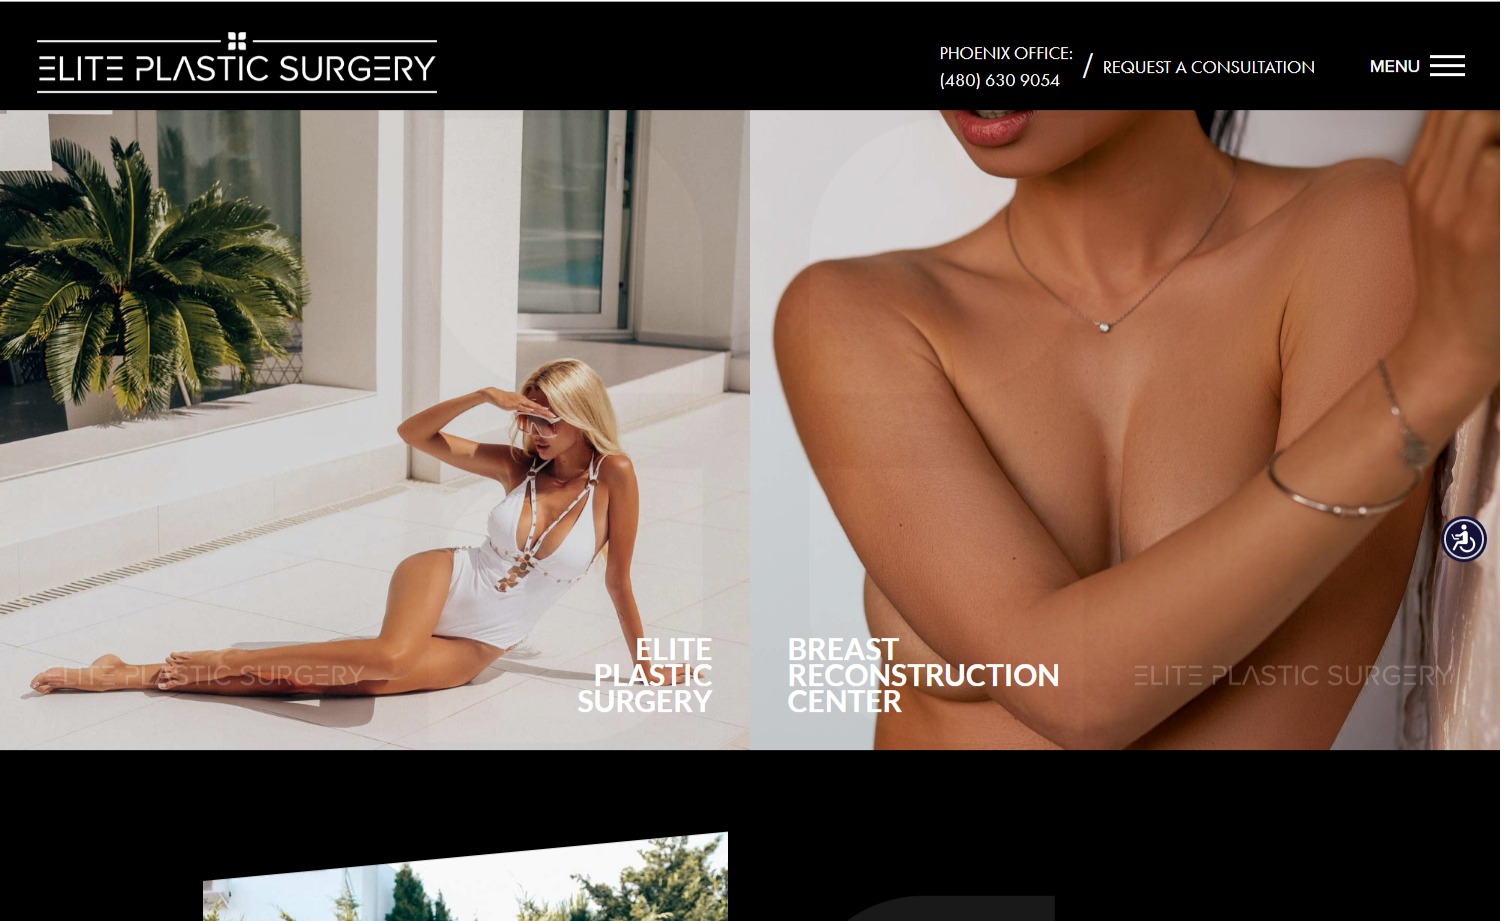 Well-Designed Plastic Surgery Websites